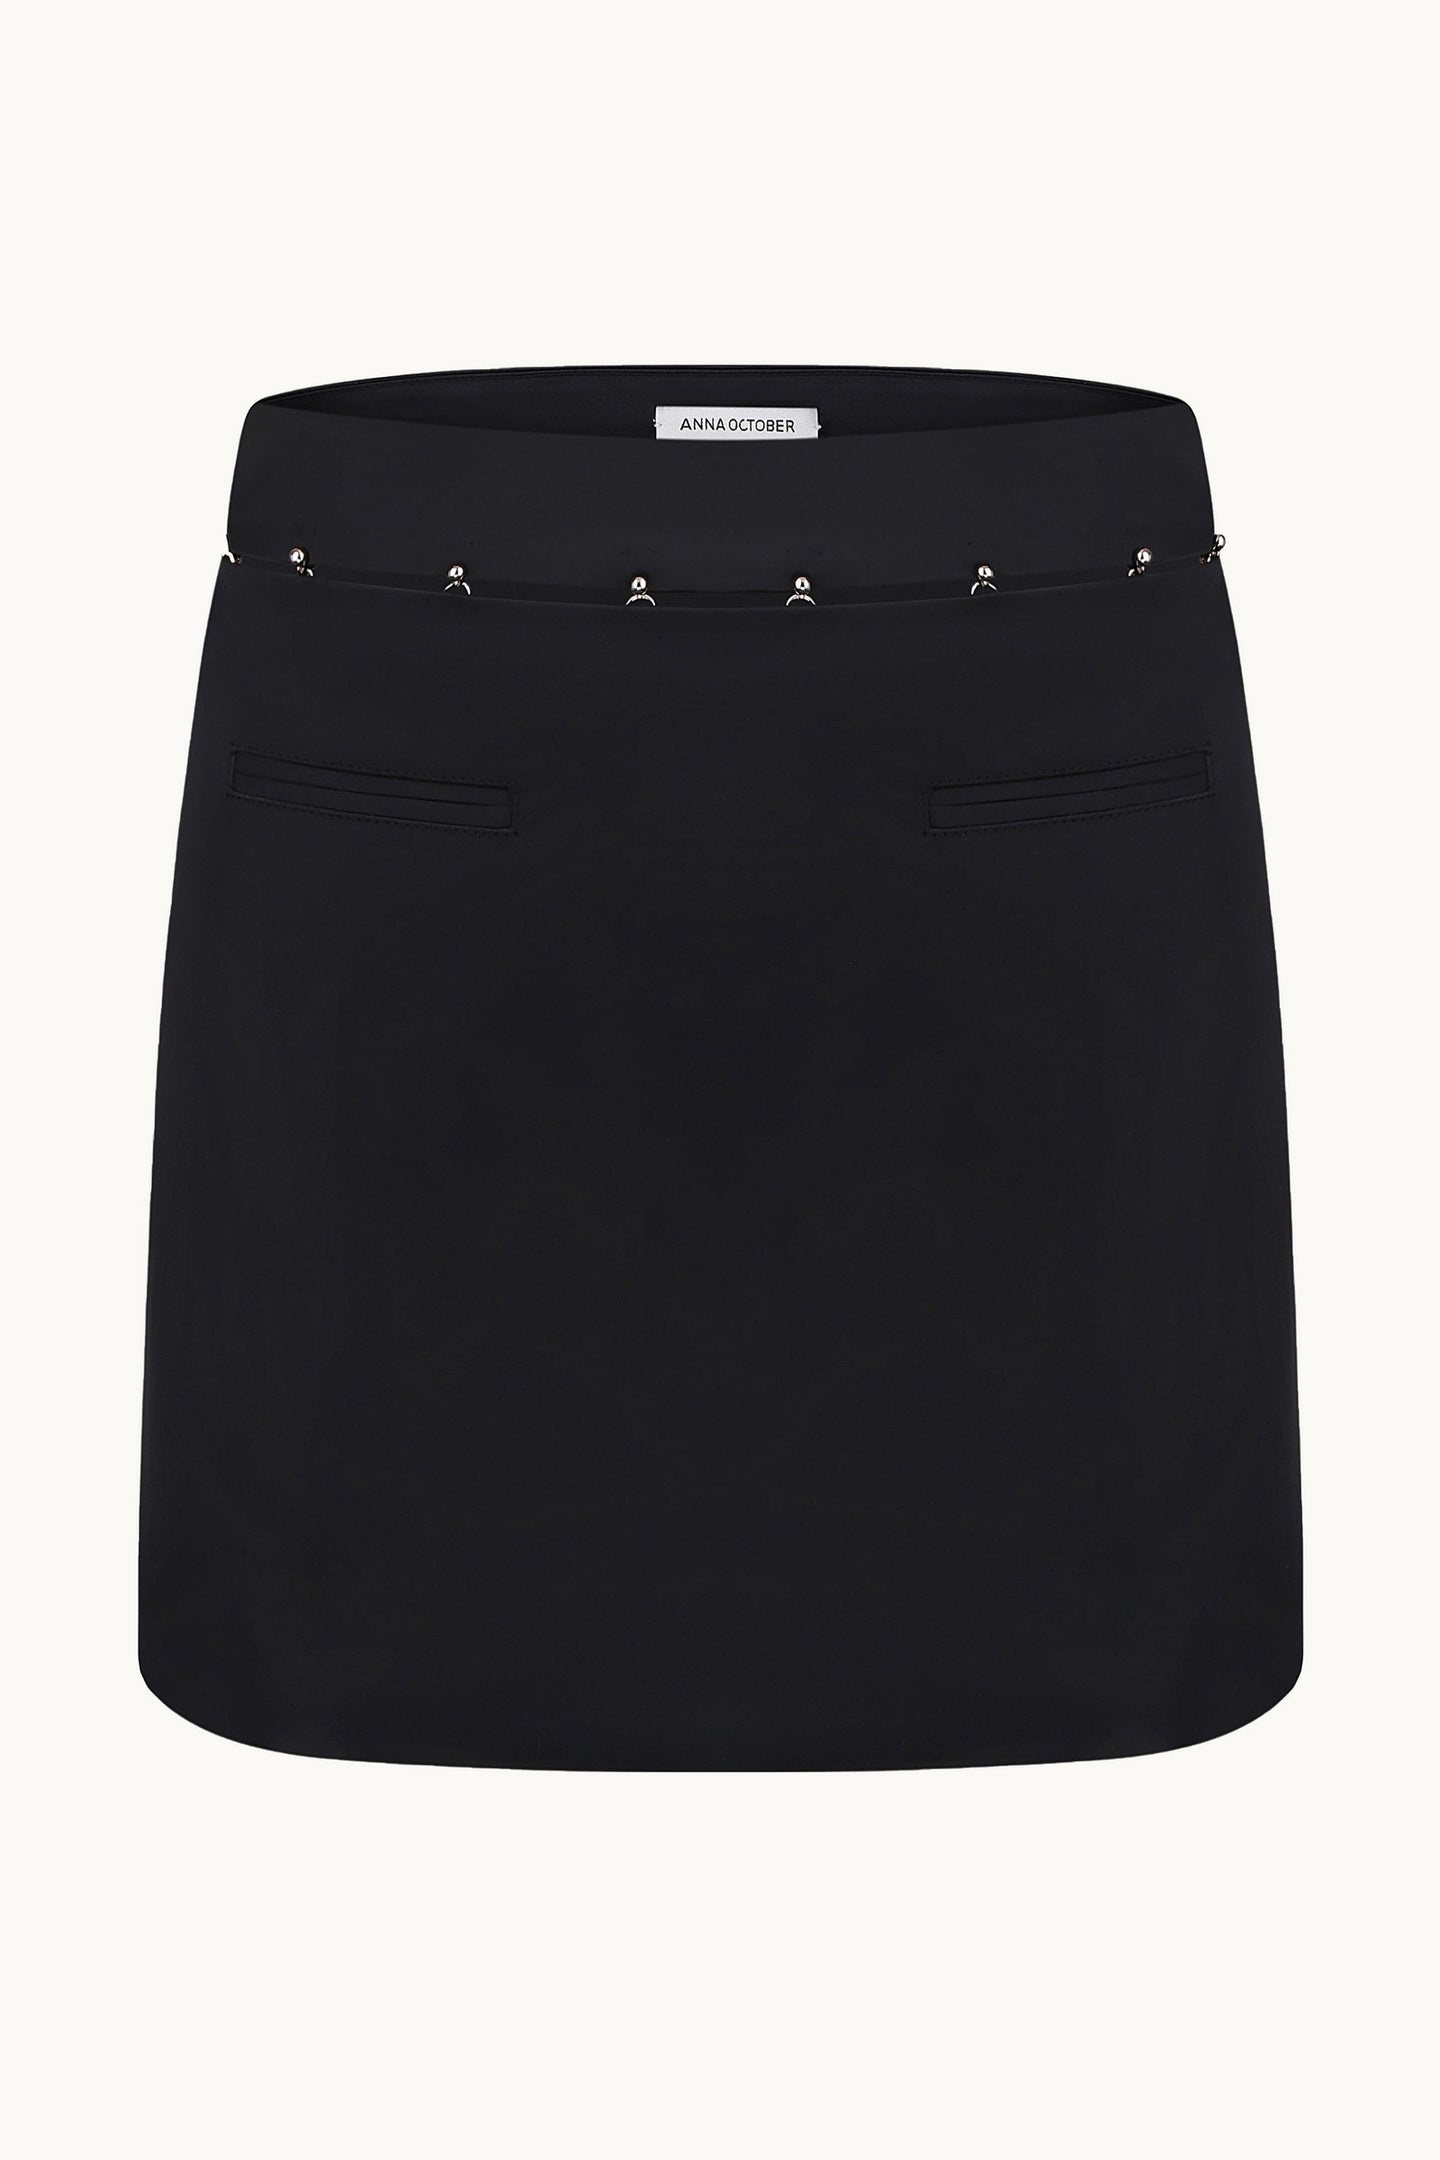 Sanna black skirt front view